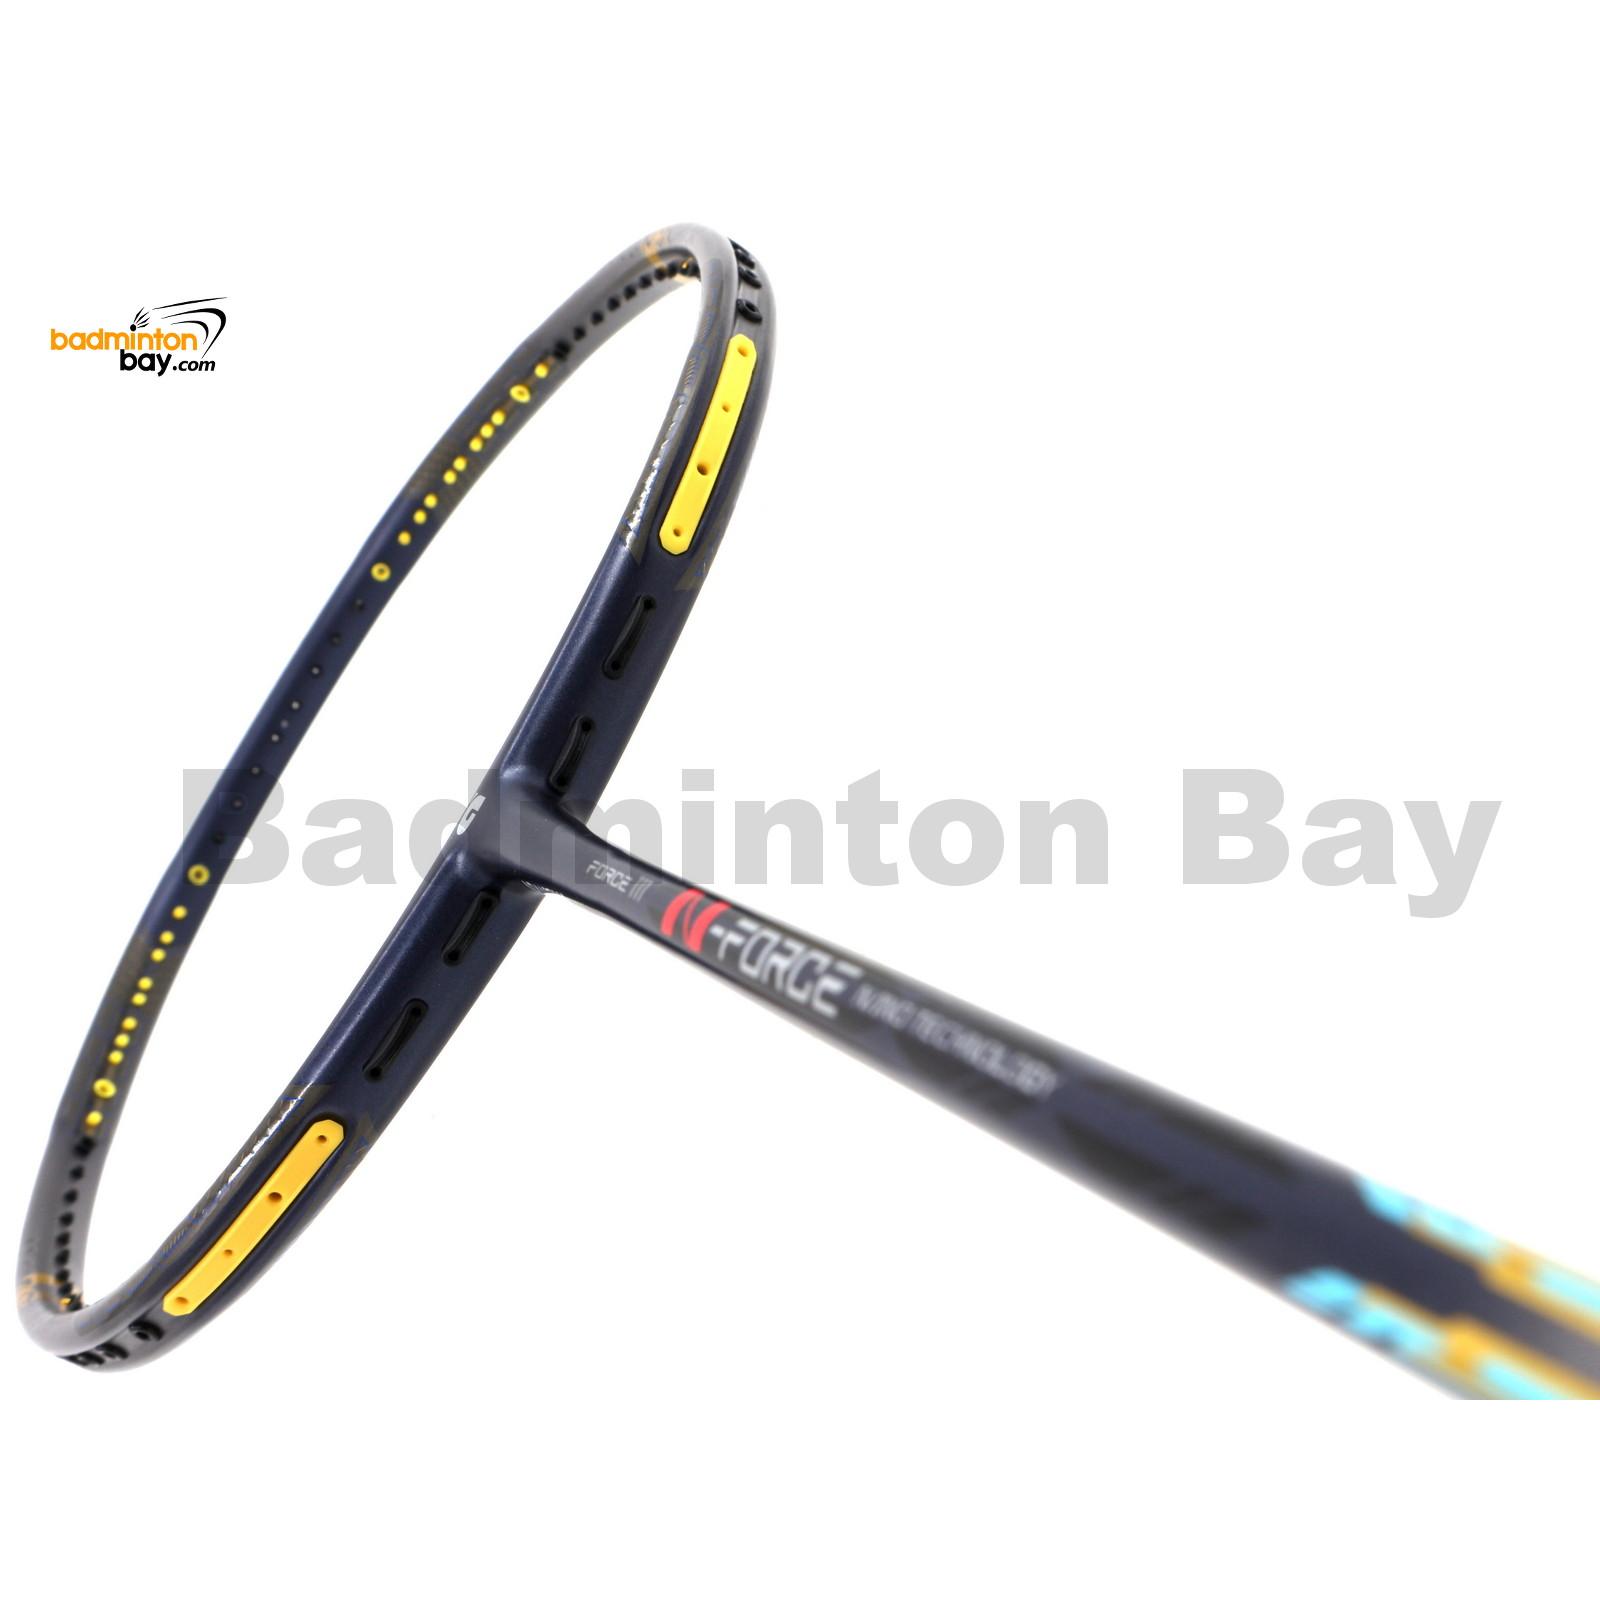 Apacs N Force III Navy Blue Badminton Racket Compact Frame (4U)